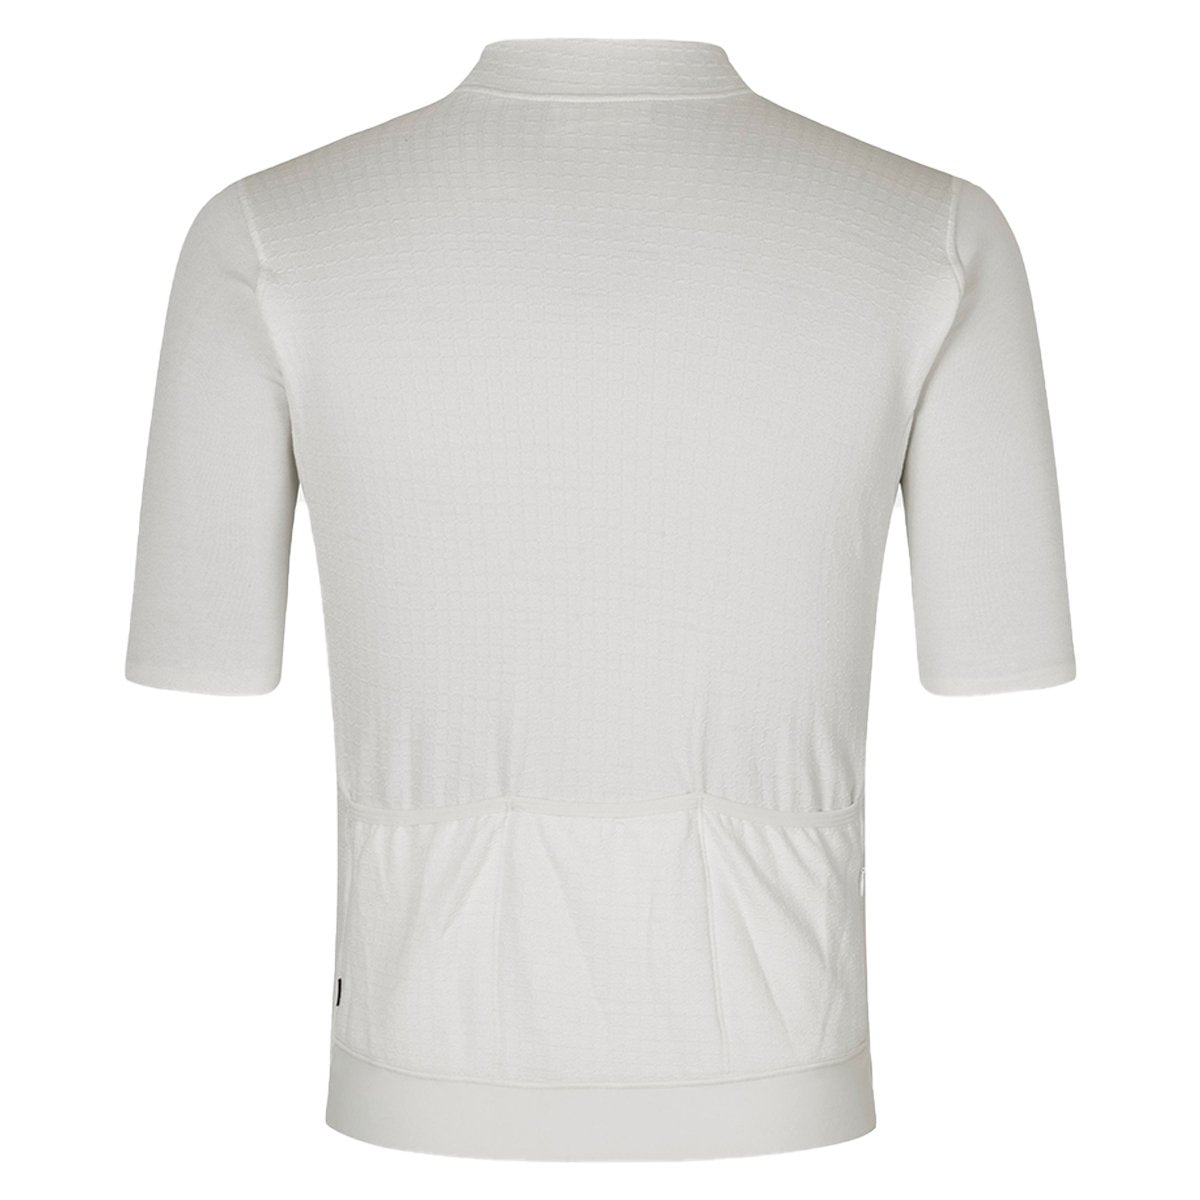 Men's Escapism Wool Jersey - Off White